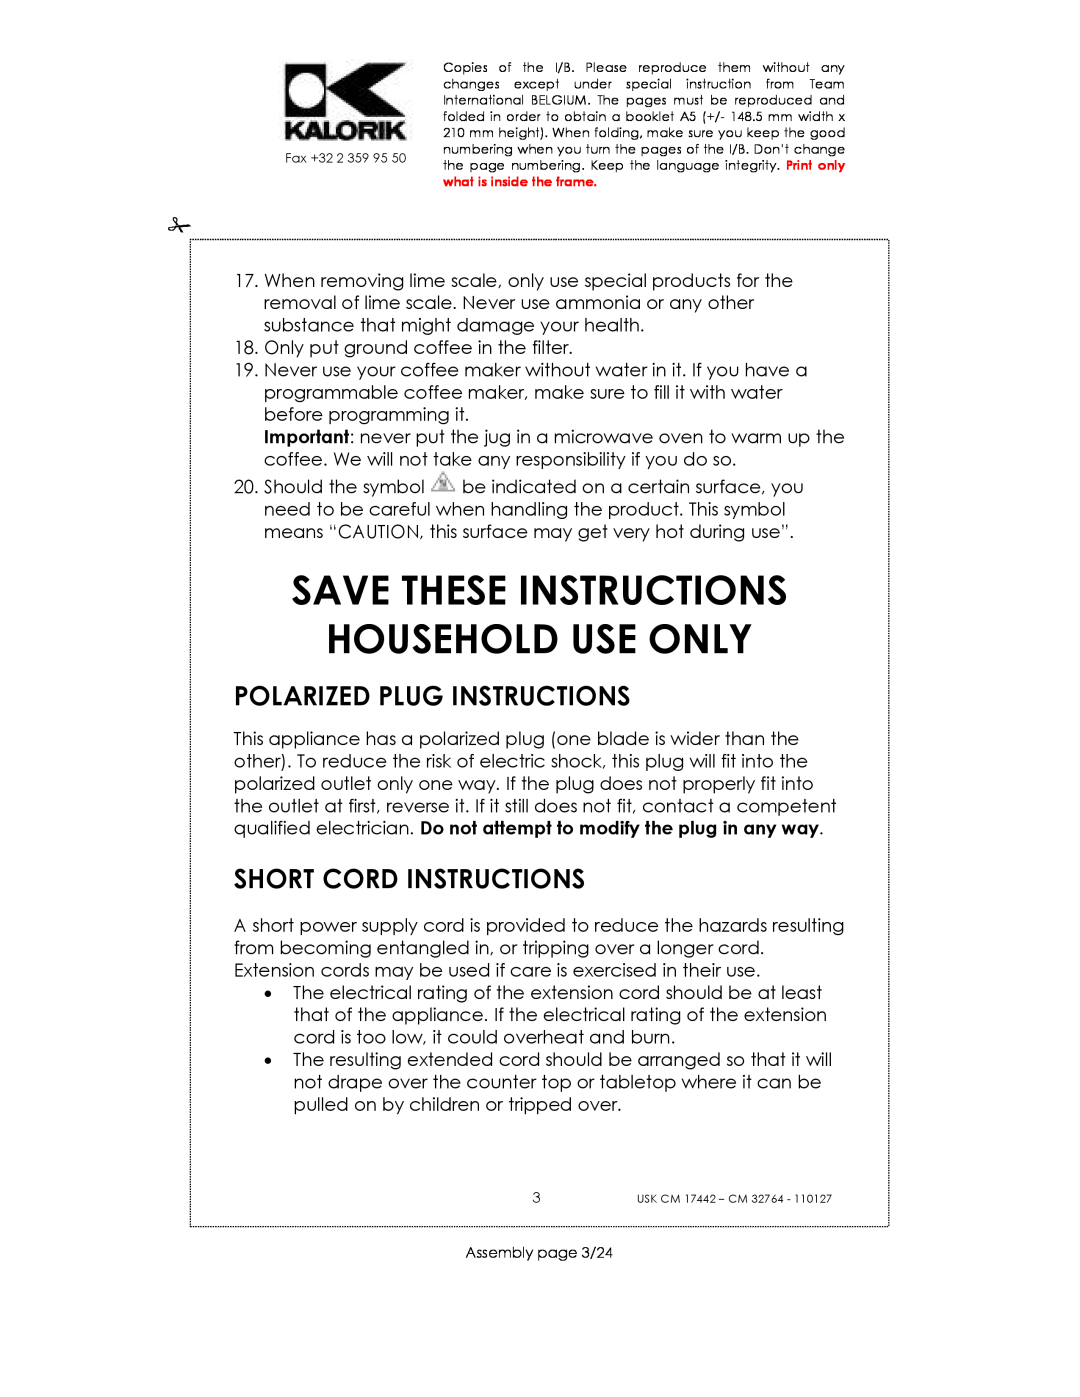 Kalorik USK CM 32764 Save These Instructions Household Use Only, Polarized Plug Instructions, Short Cord Instructions 